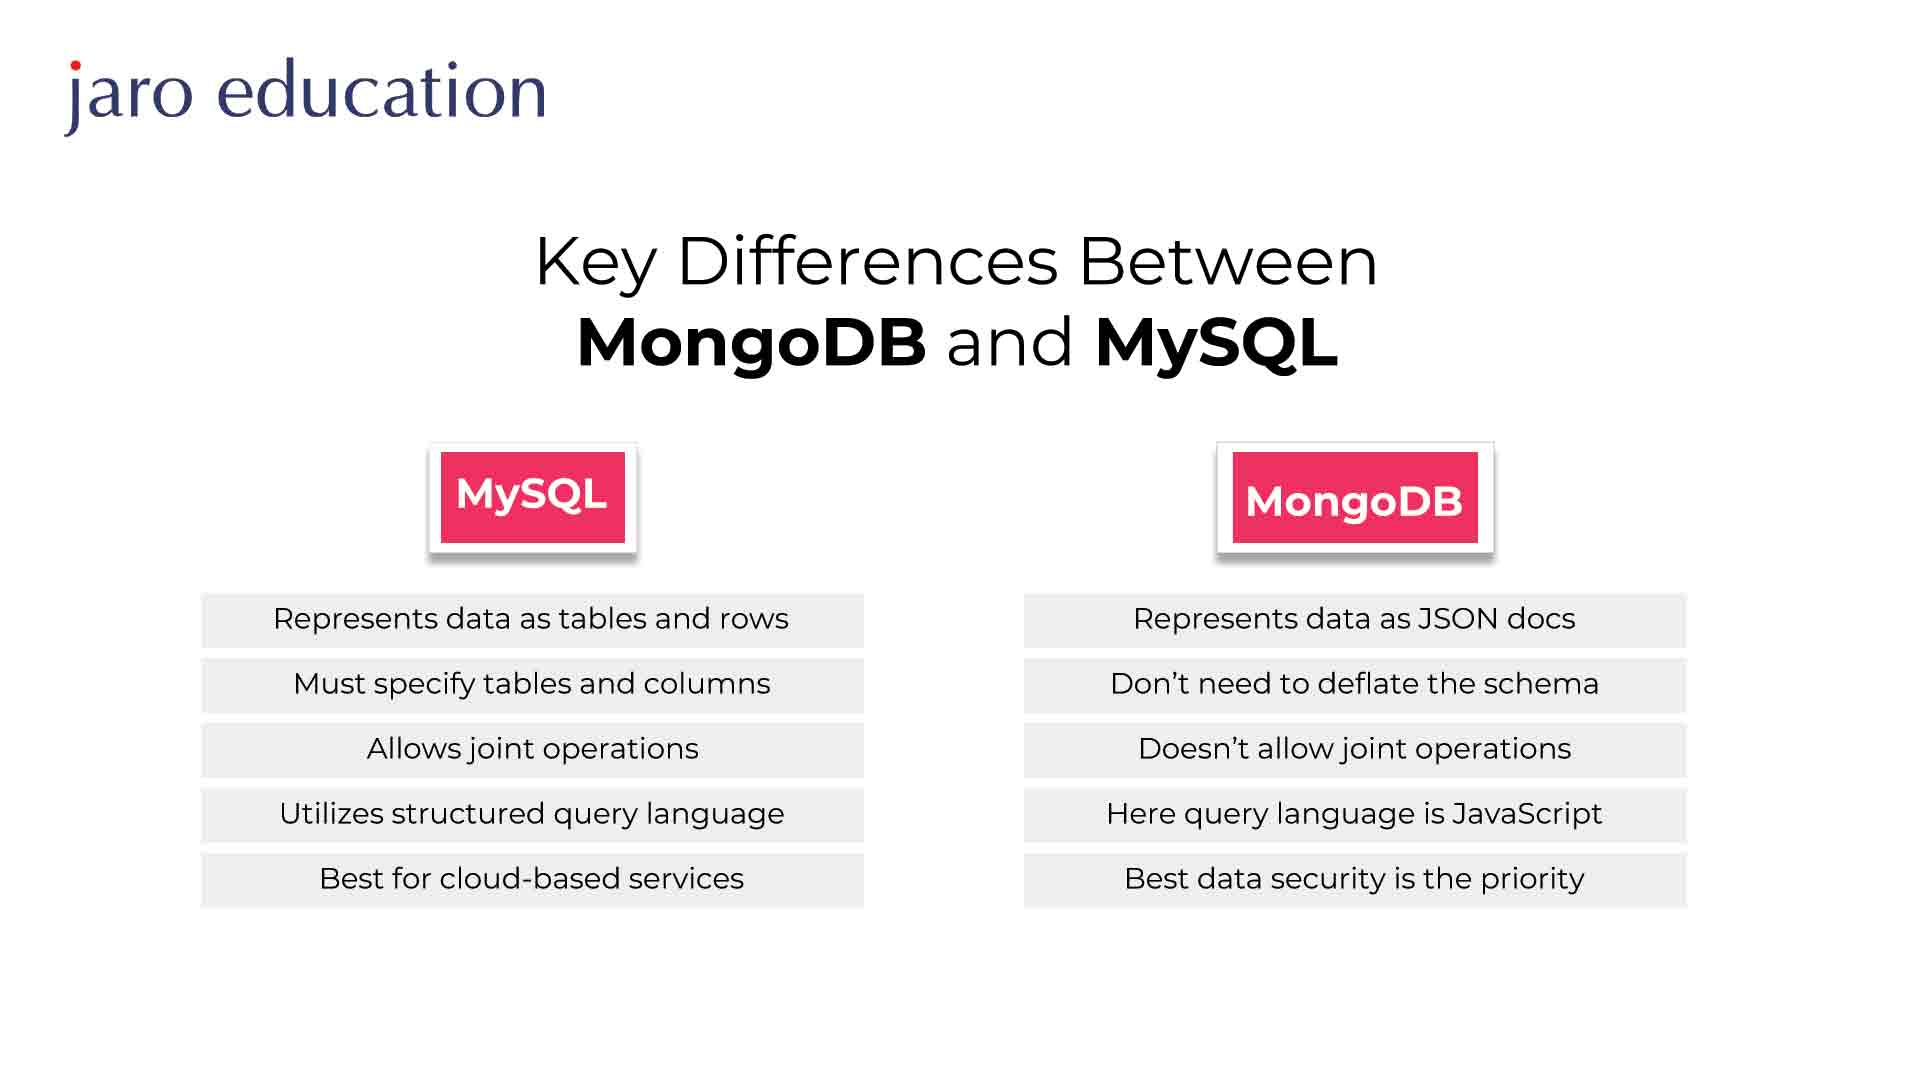 Key difference between MYSQL and MongoDB